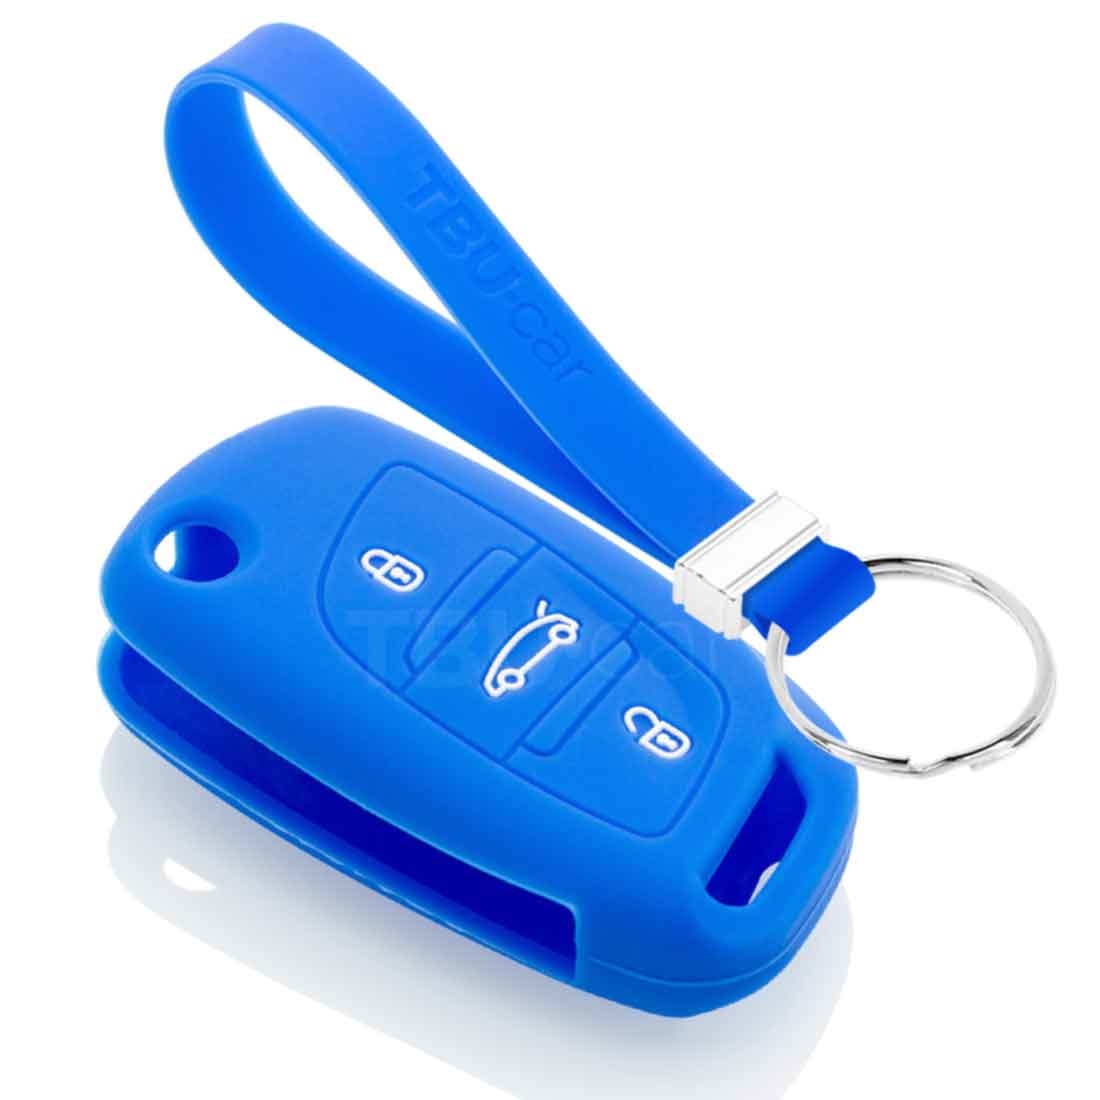 TBU car TBU car Autoschlüssel Hülle kompatibel mit Peugeot 3 Tasten - Schutzhülle aus Silikon - Auto Schlüsselhülle Cover in Blau